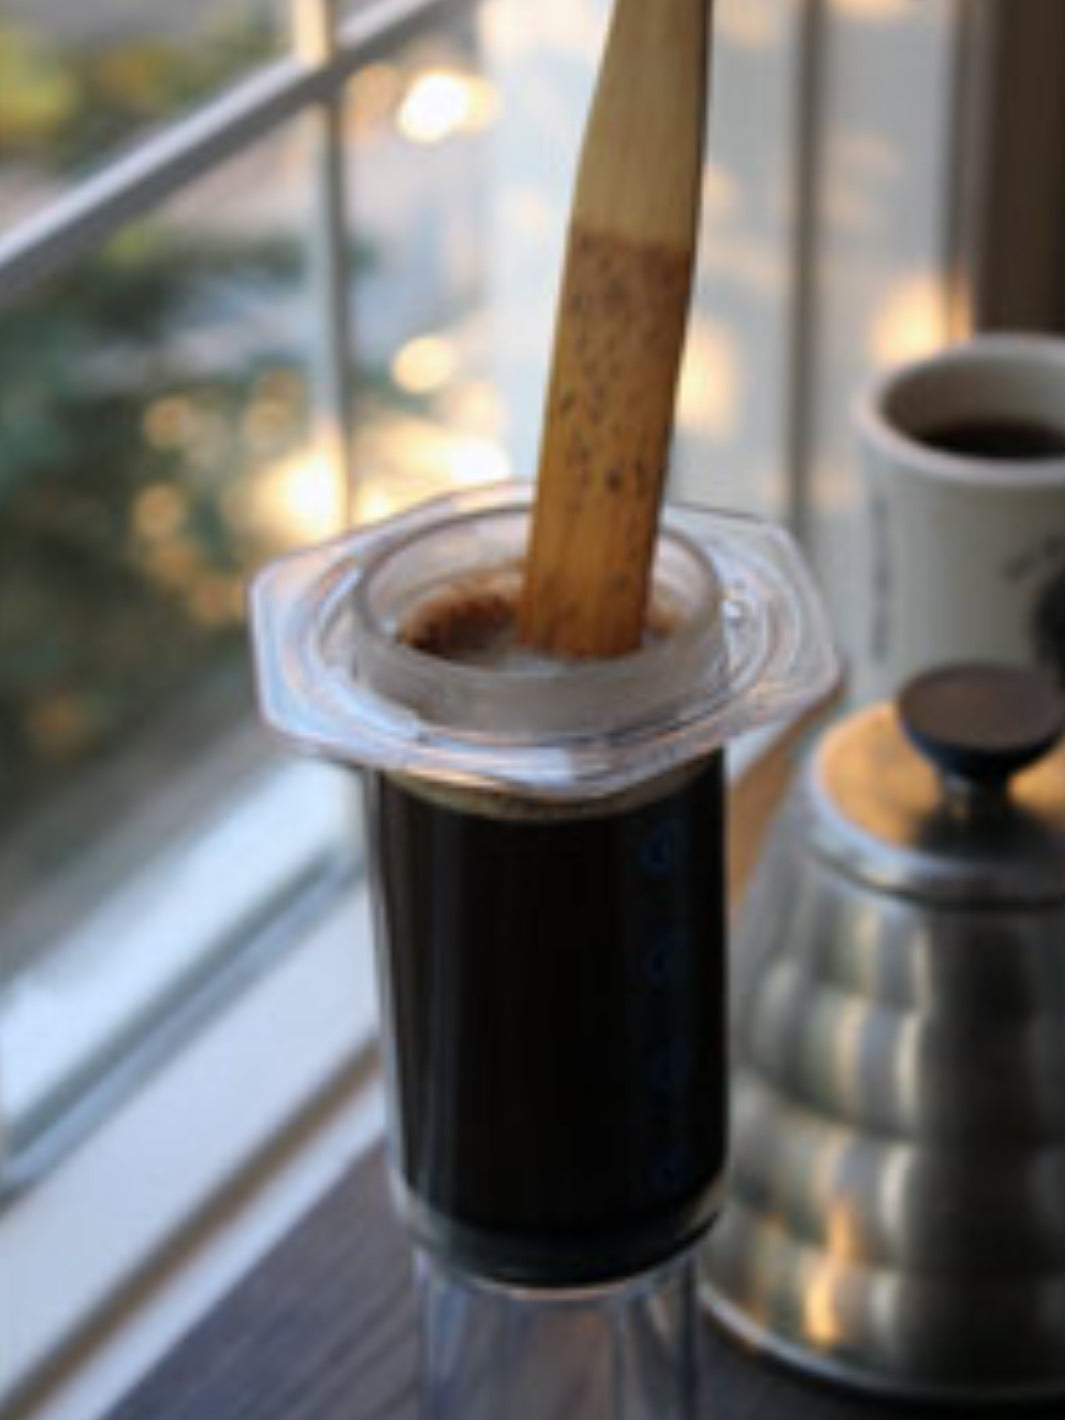 Hario Syphon Stirrer - spatula for coffee stirring